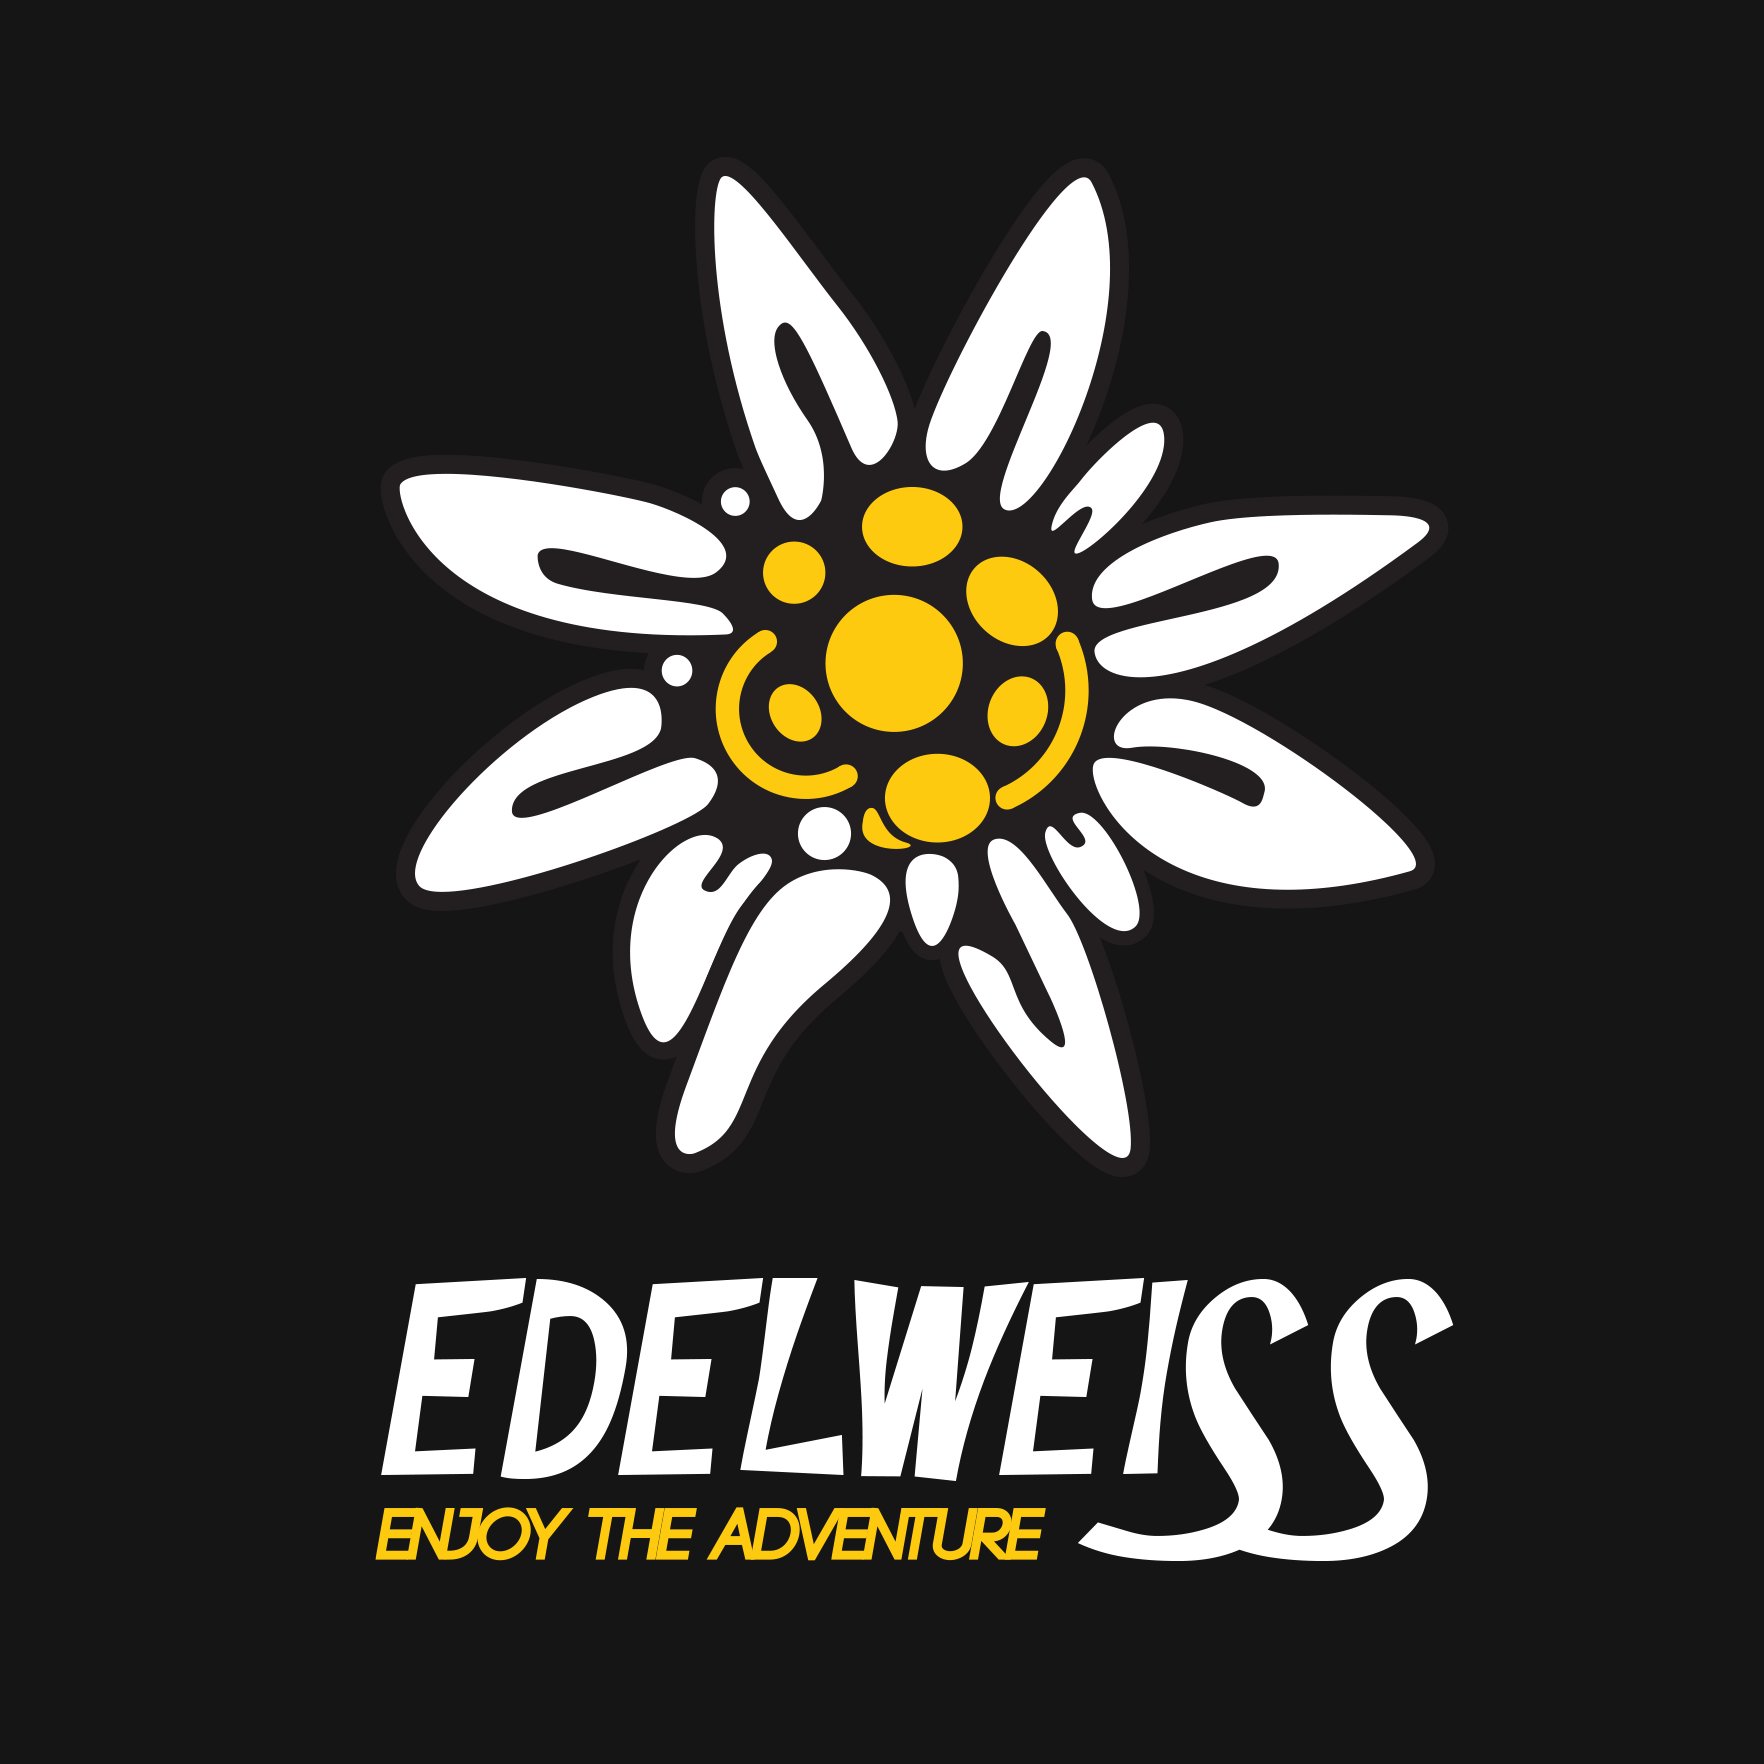 Edelweiss Shop